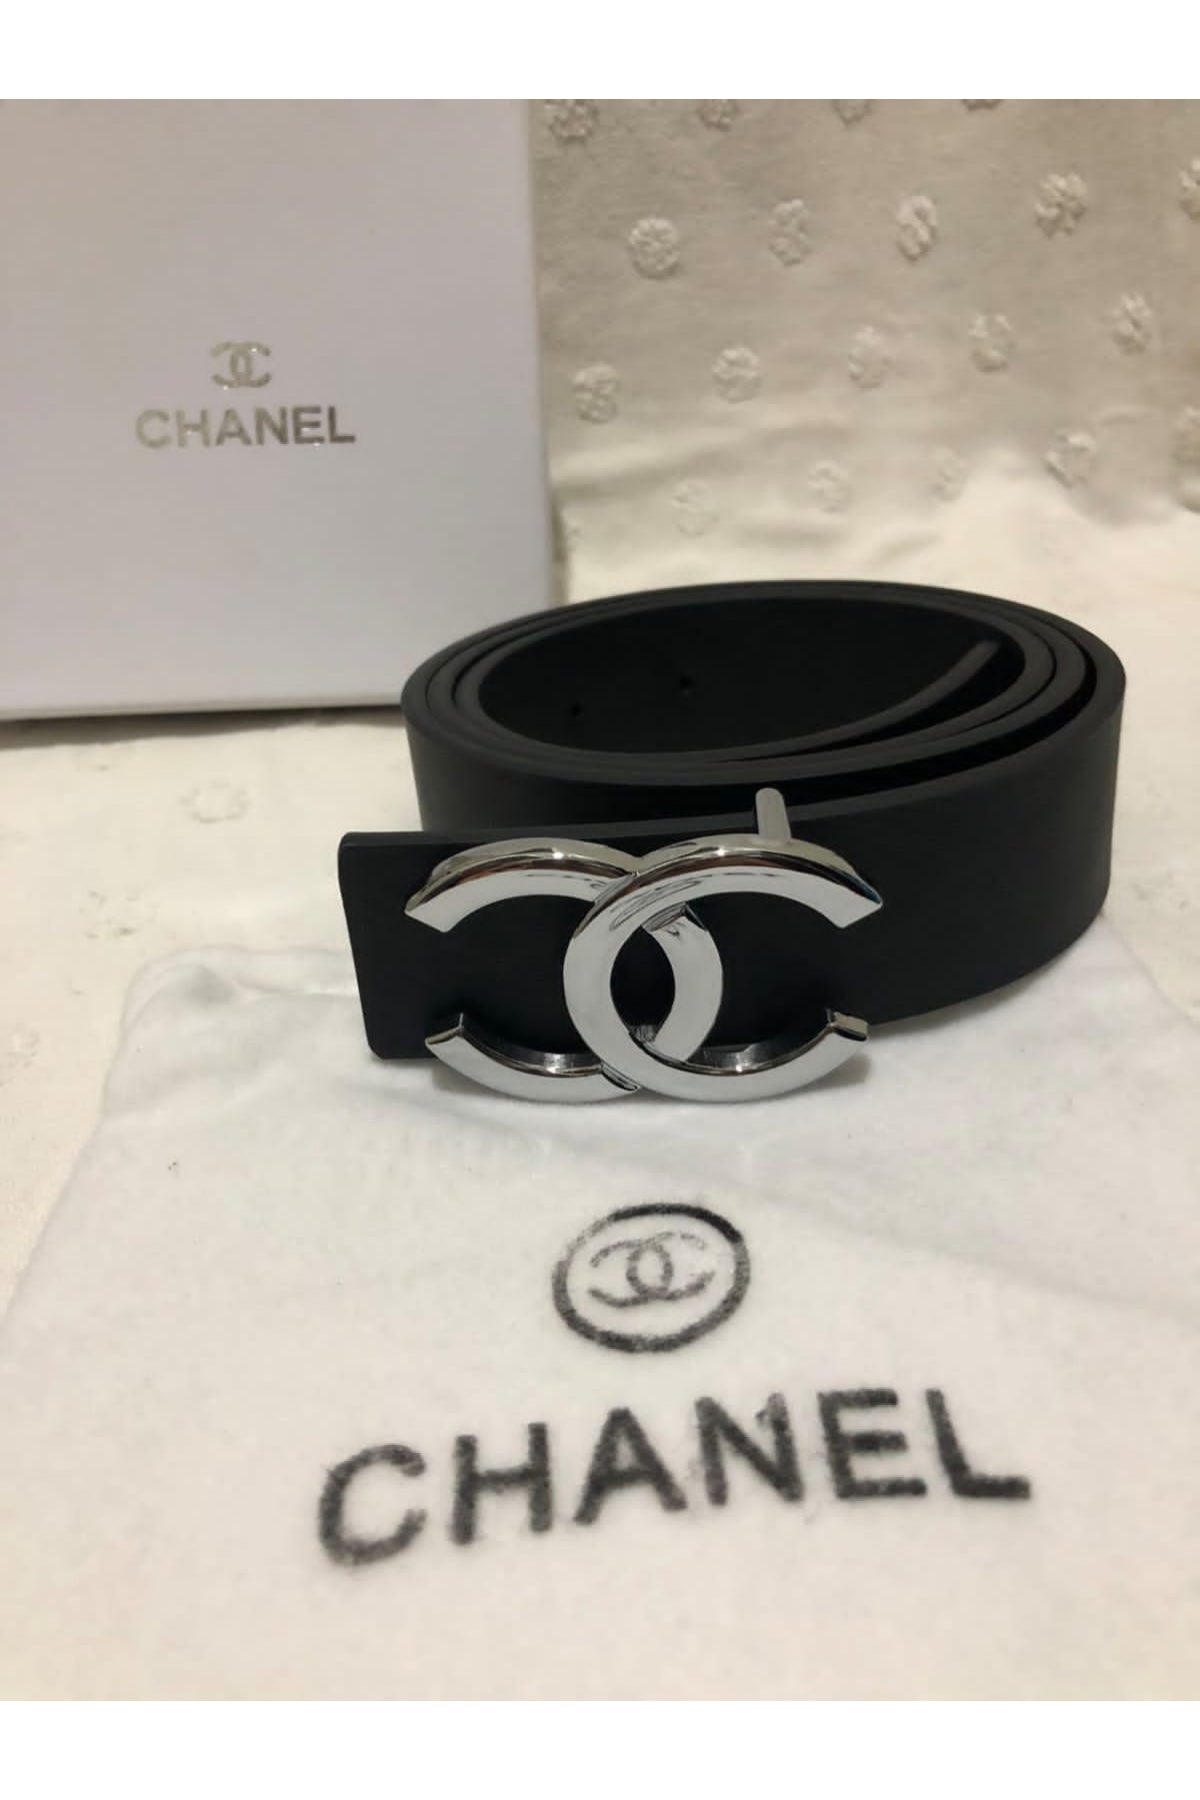 CHANEL - Orignal Leather Belt - UAE